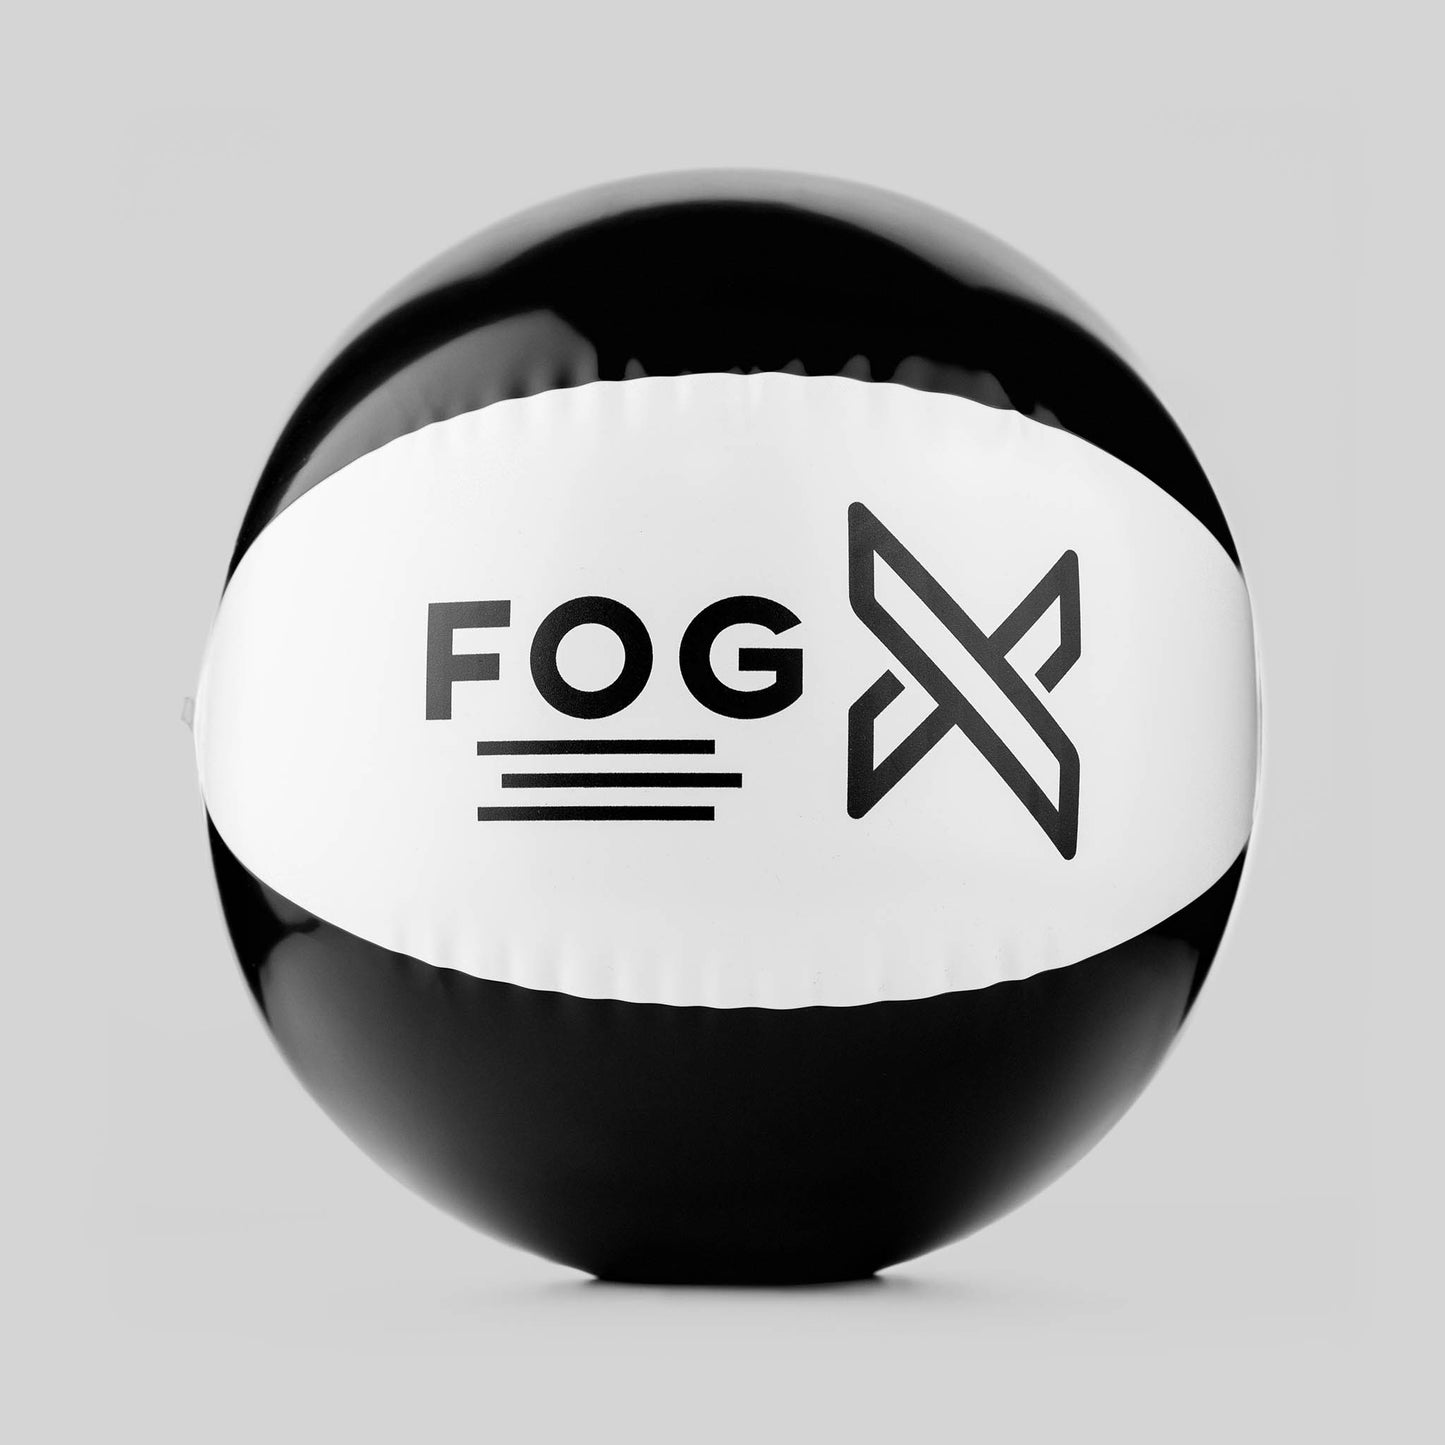 FOG X Vapor Inflatable Beach Ball Black White